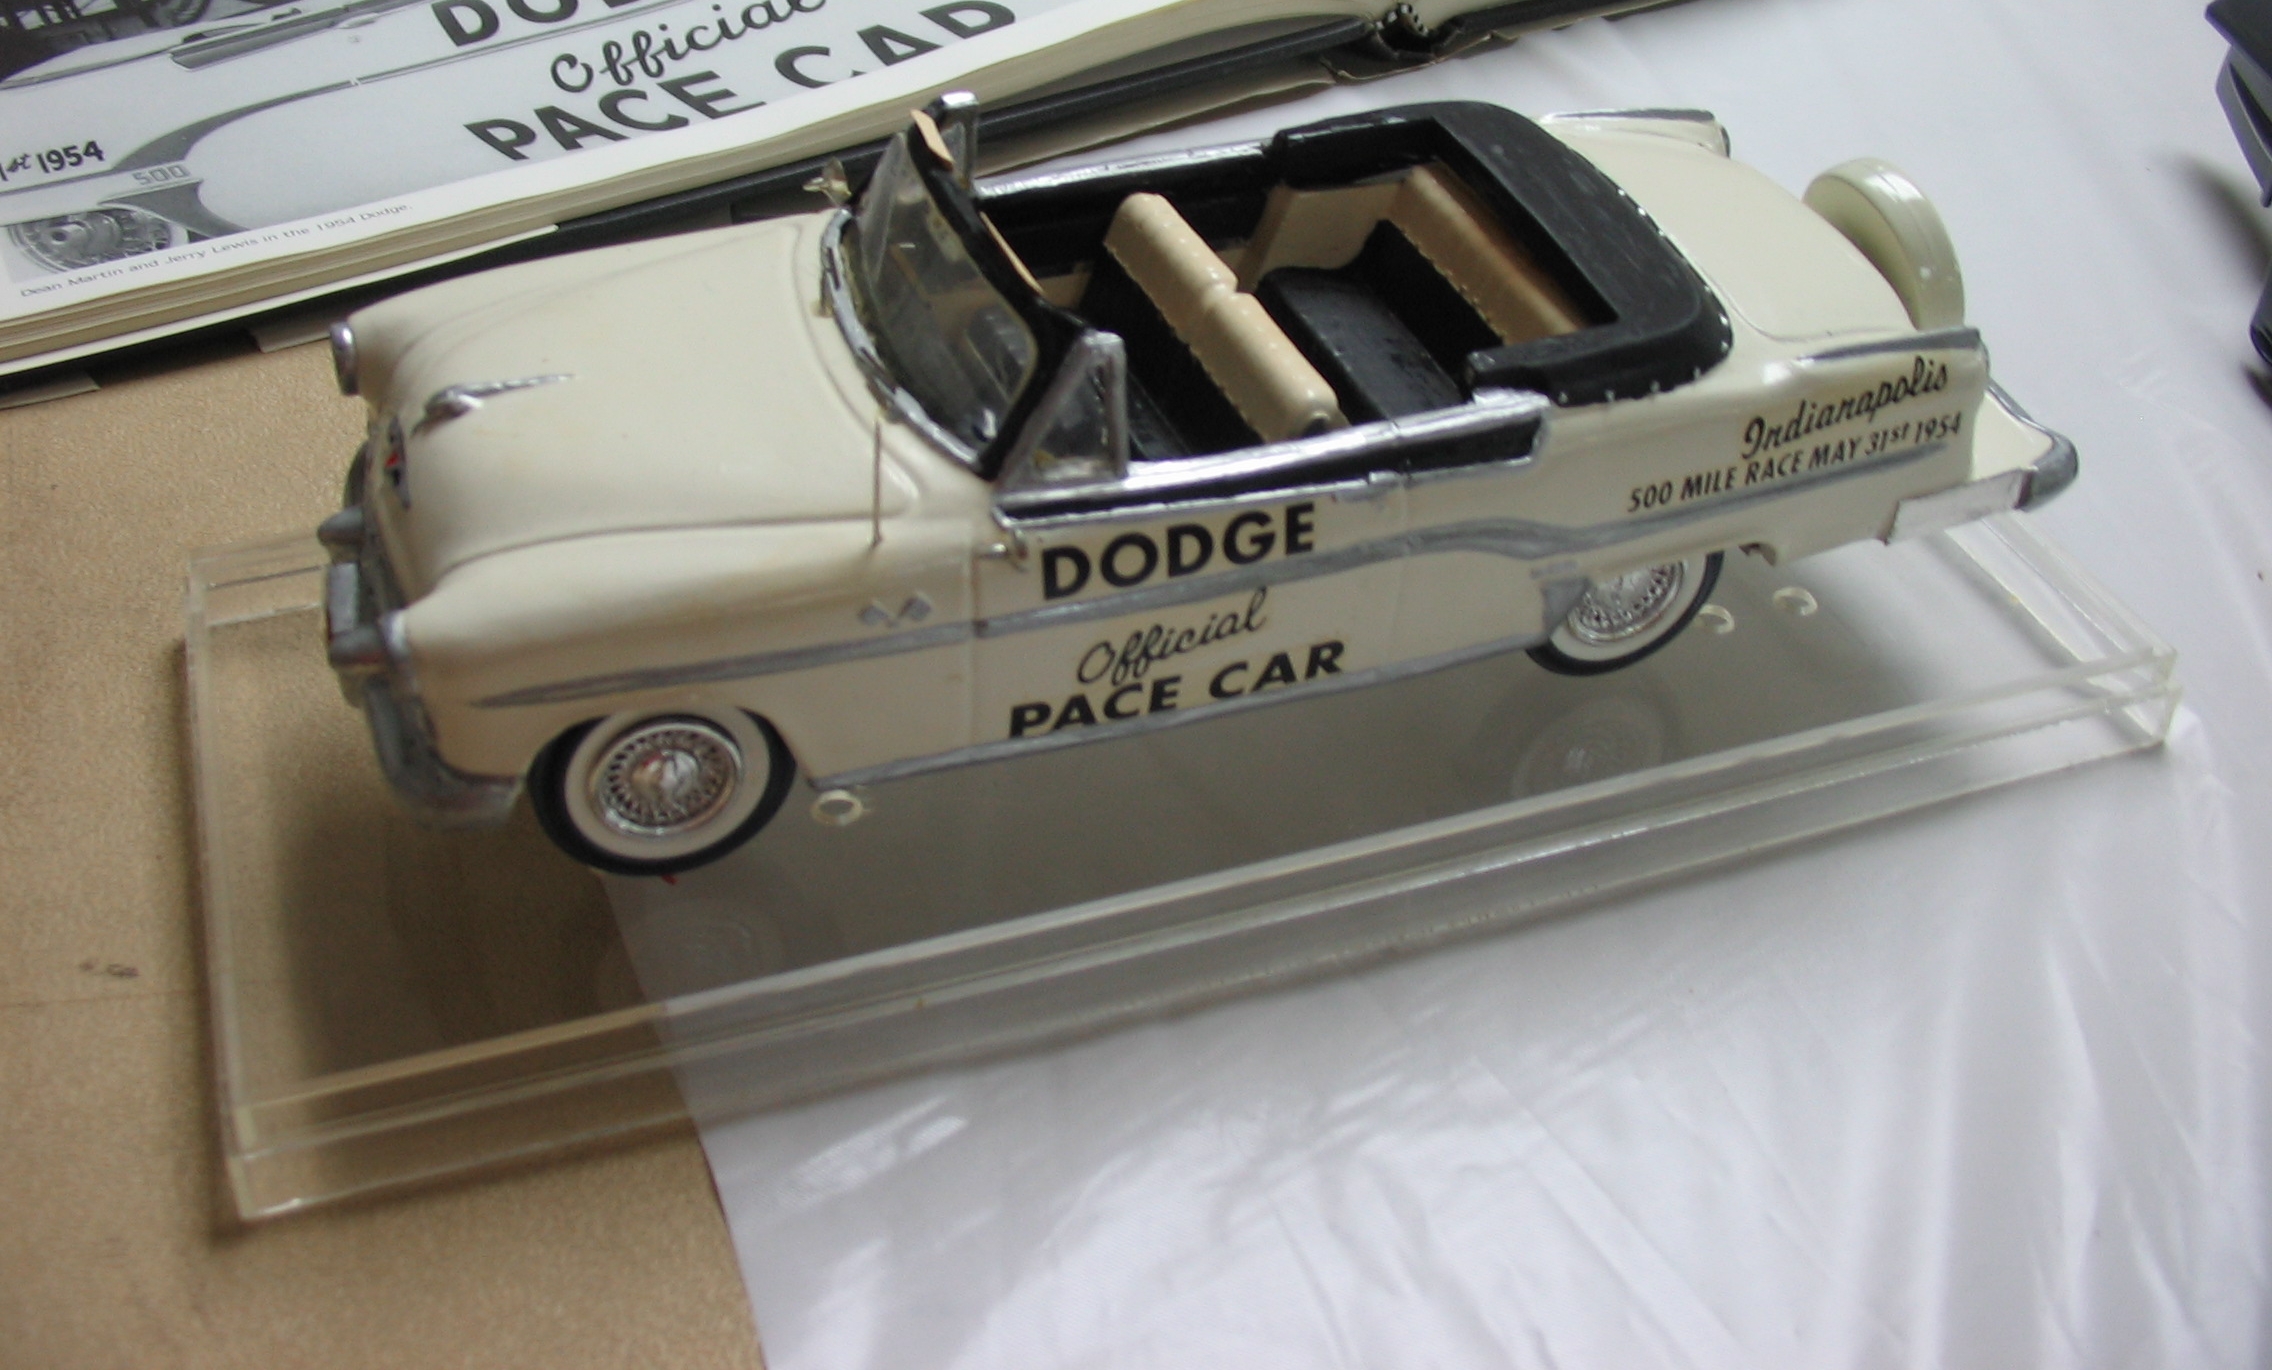 Dodge Royal pace car